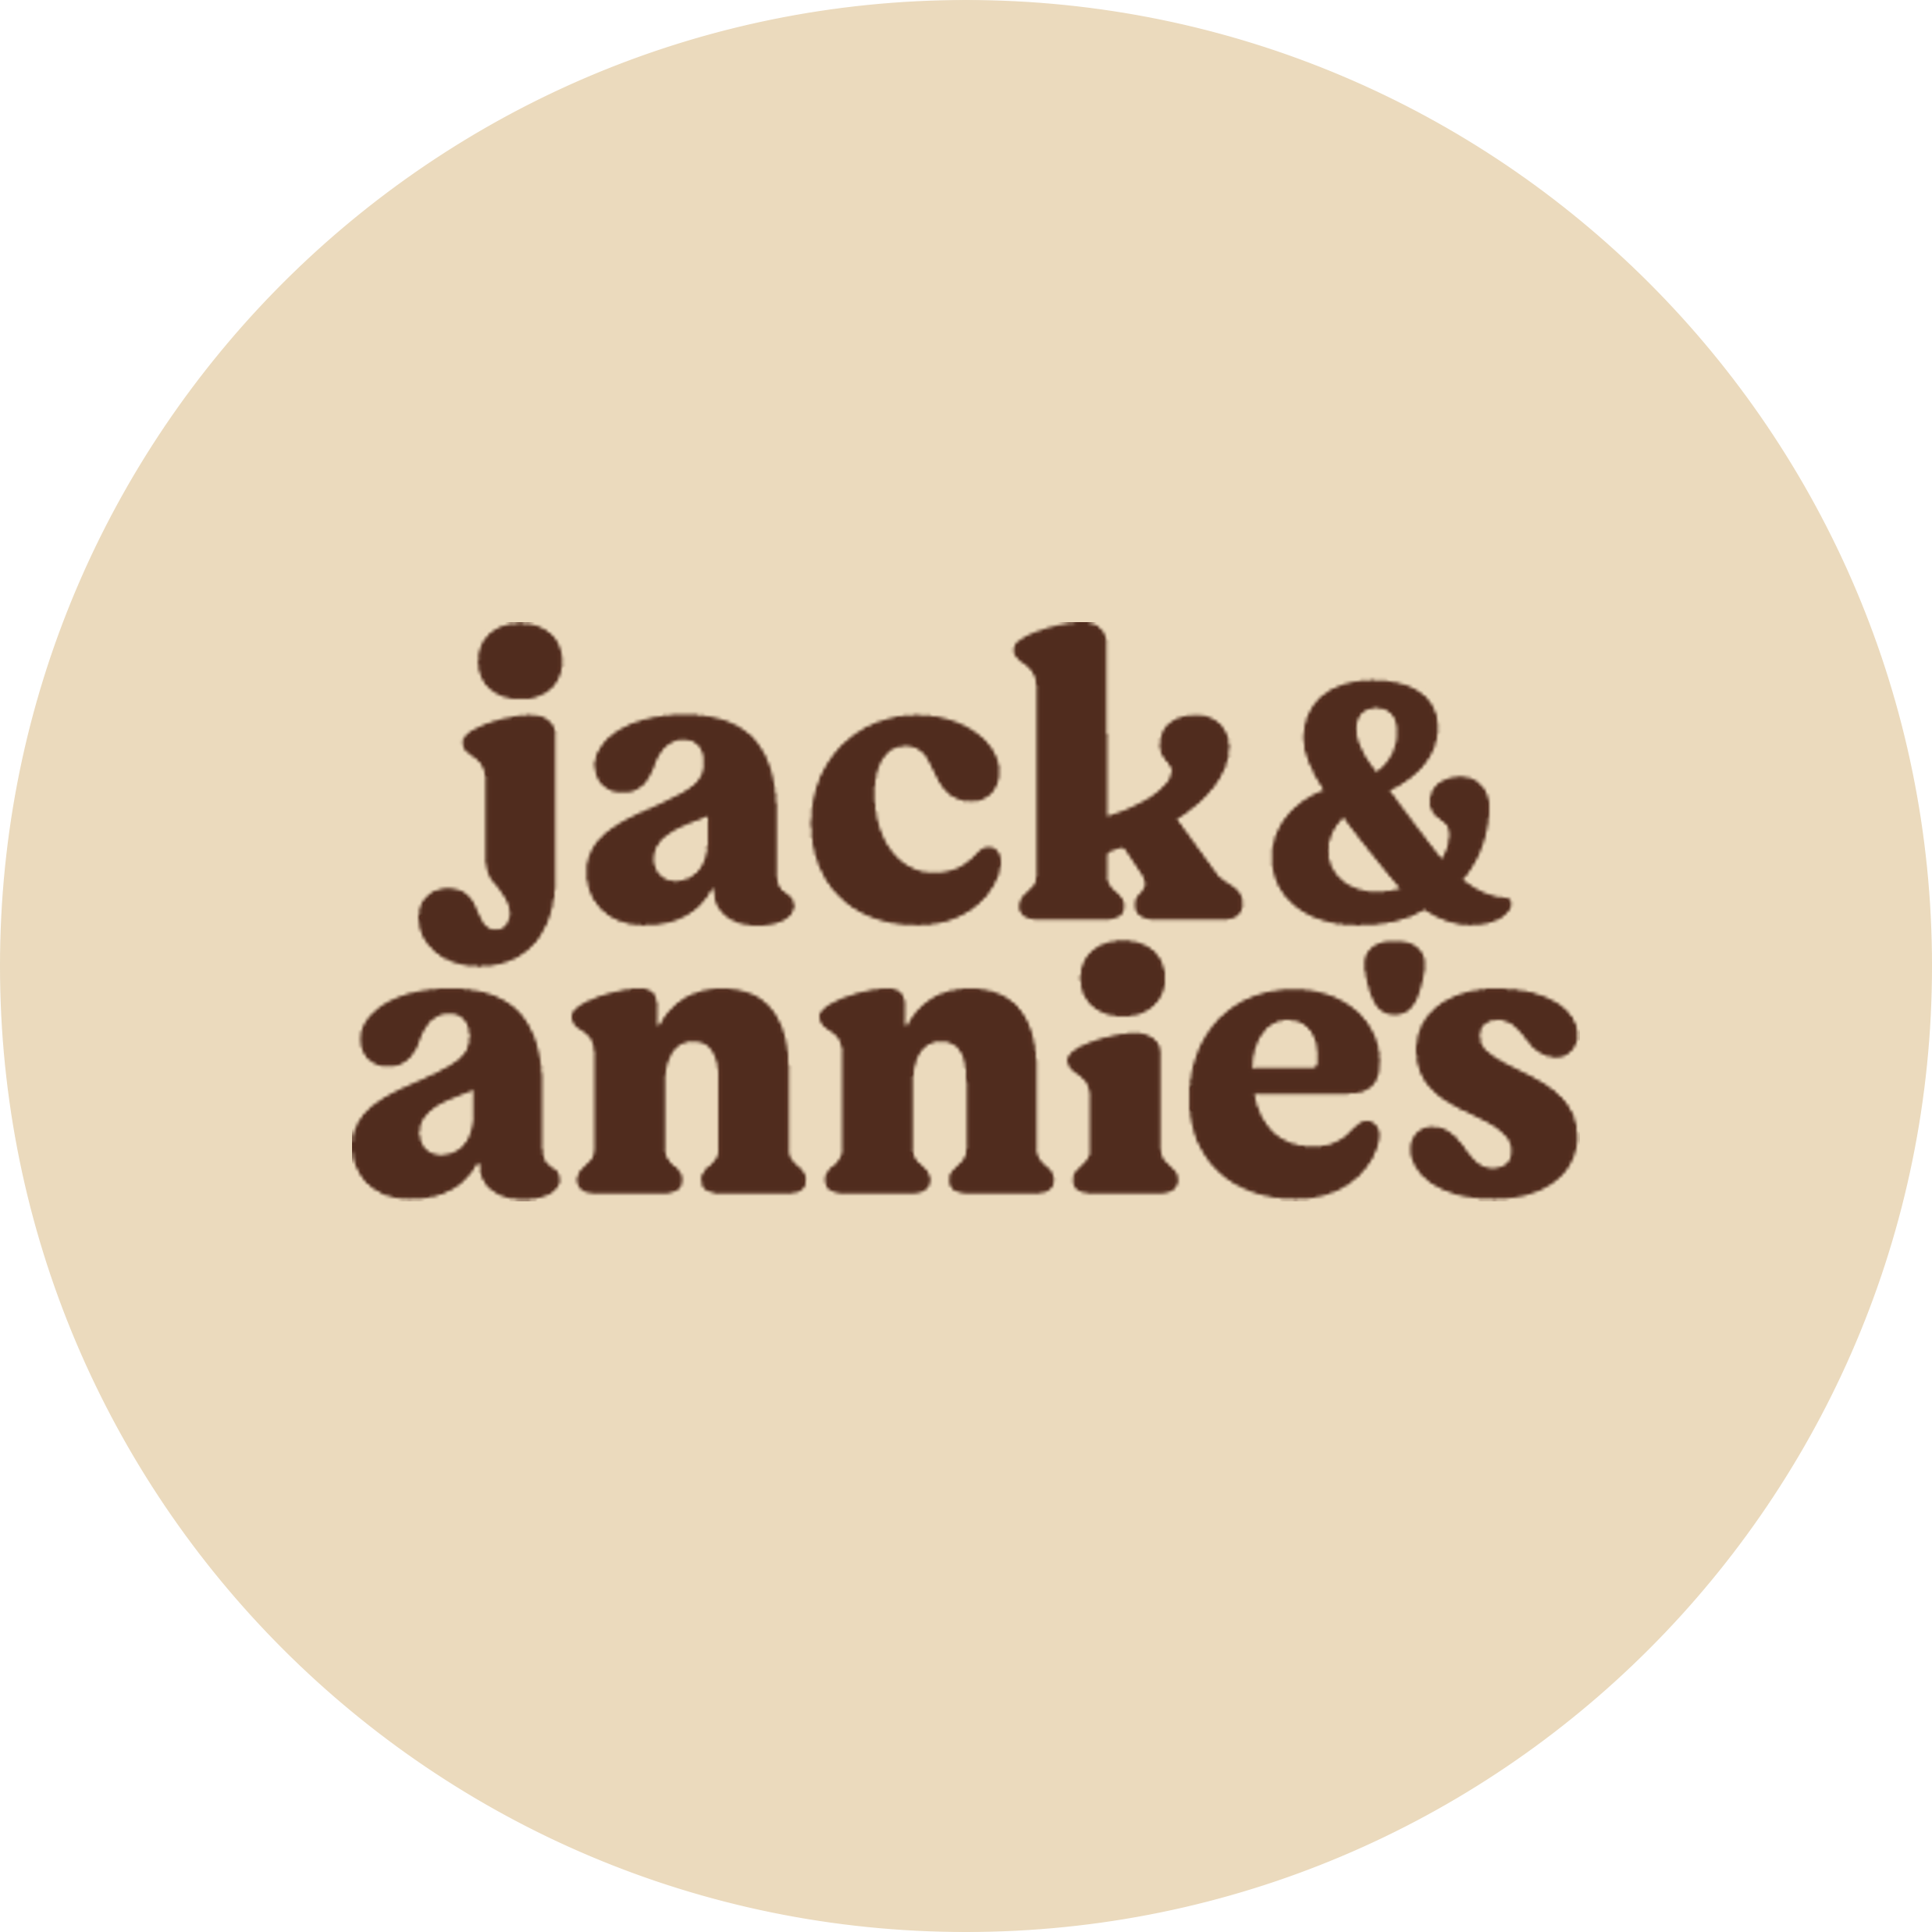 jack & annies logo